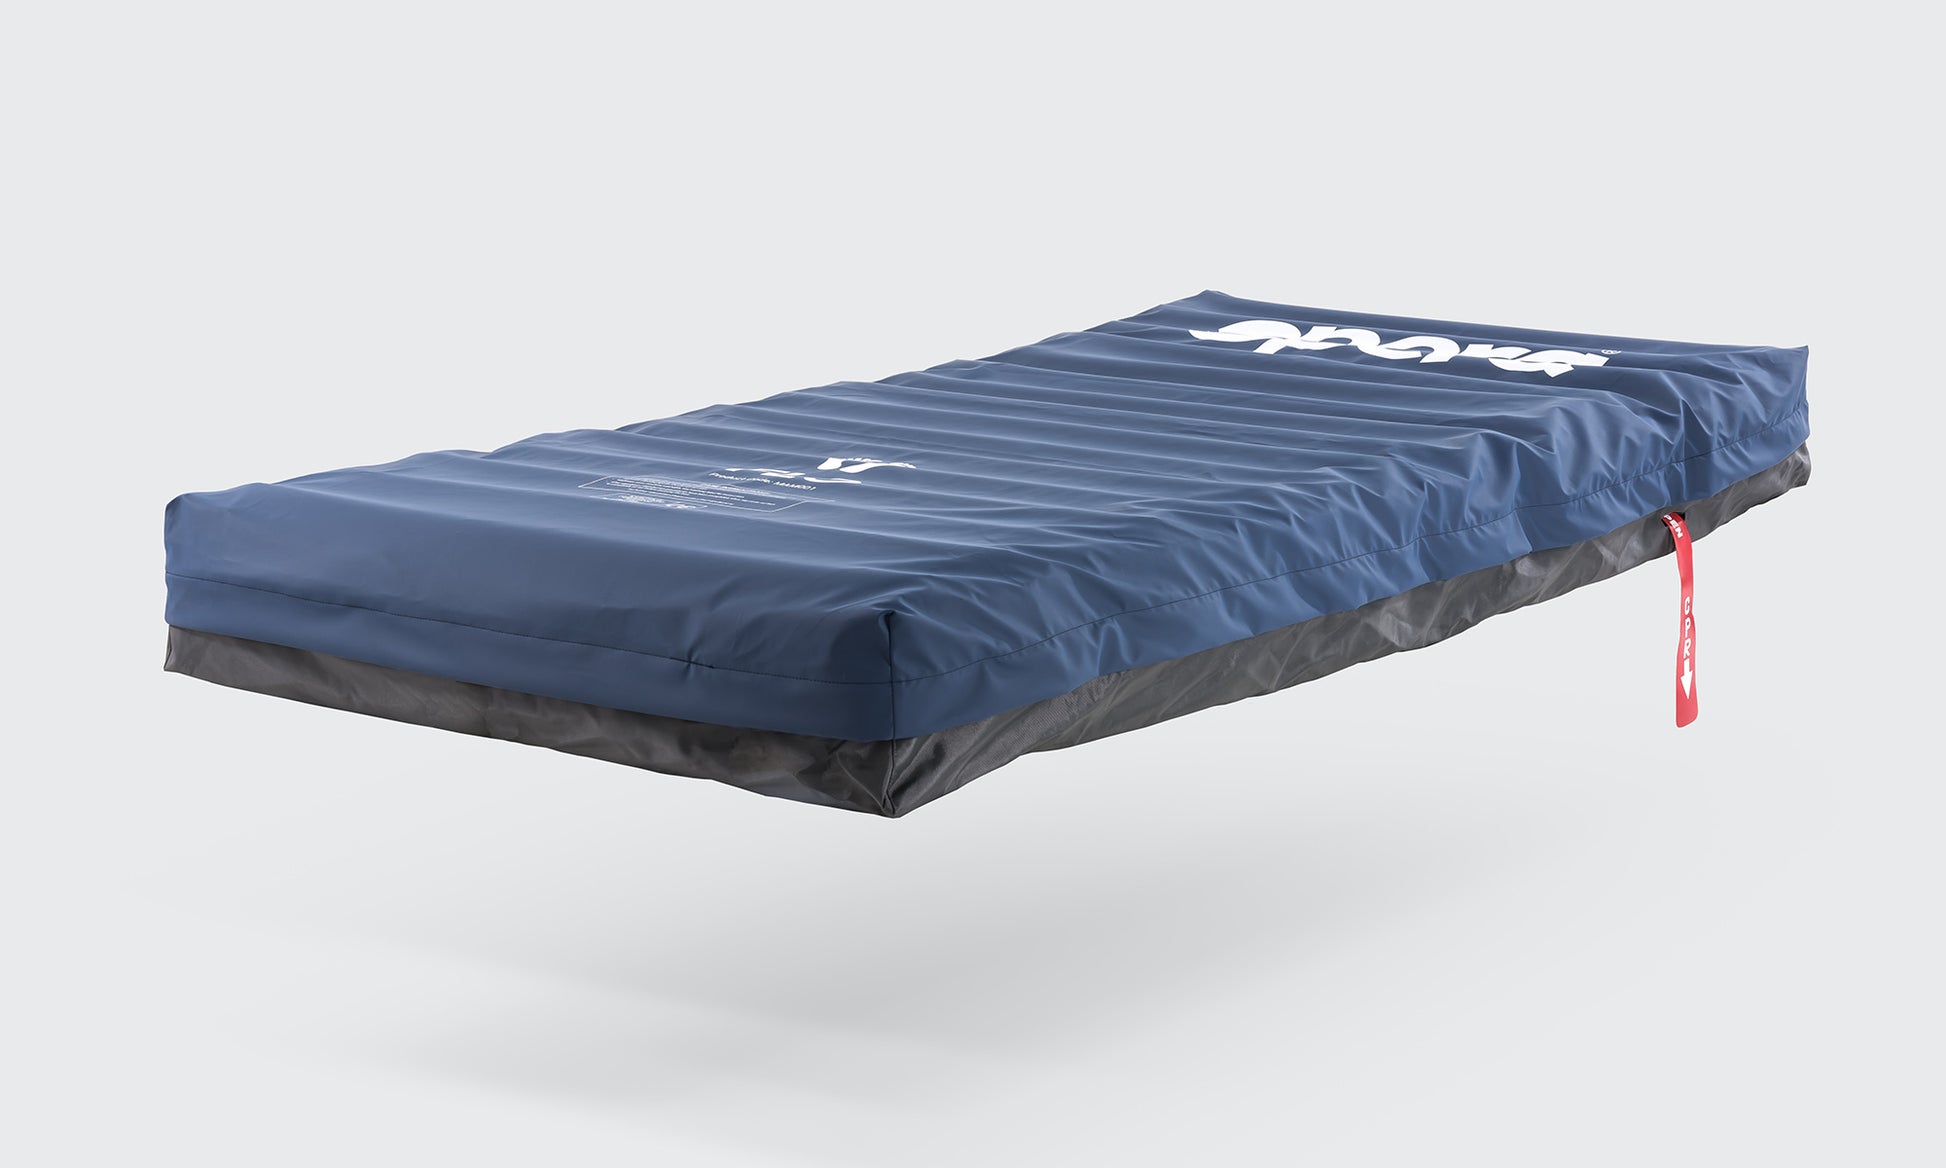 Flo air mattress system flat lay 